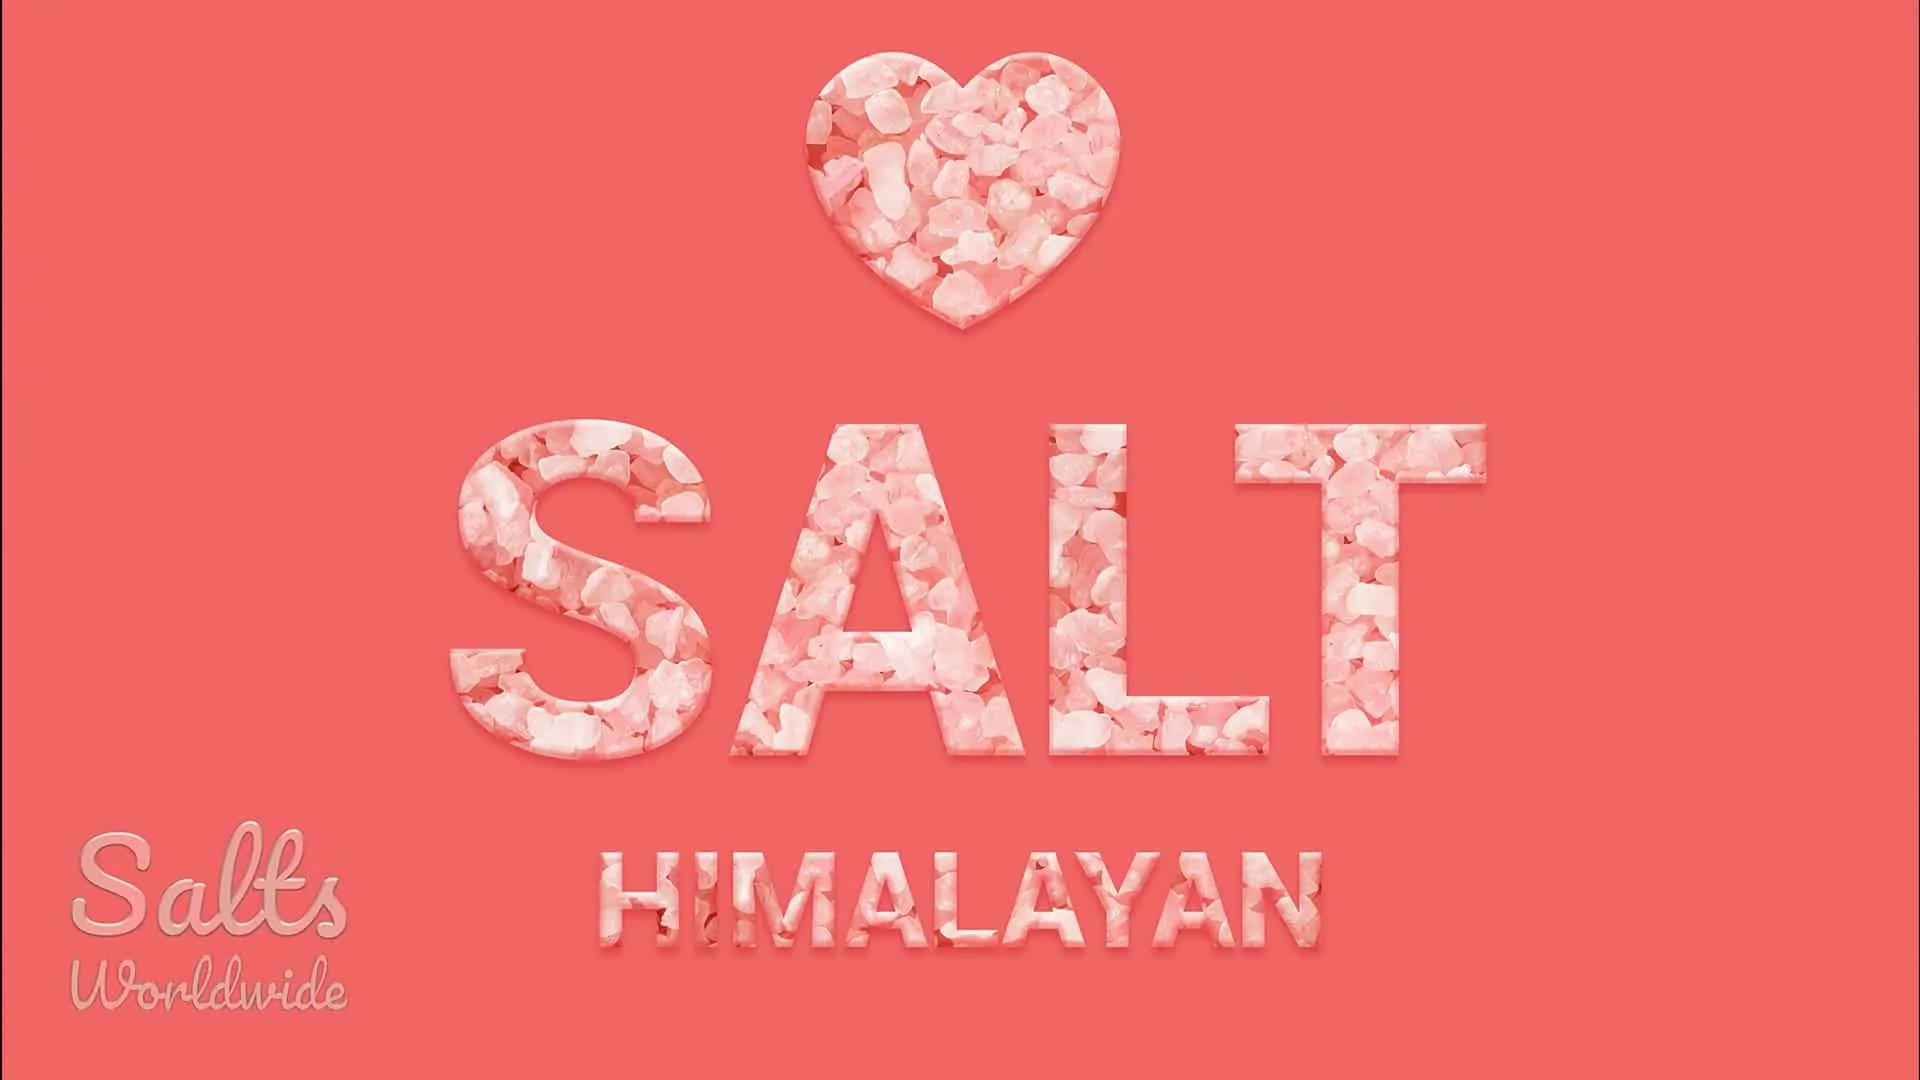 What is Pink Himalayan Salt Good For - Salt's uses